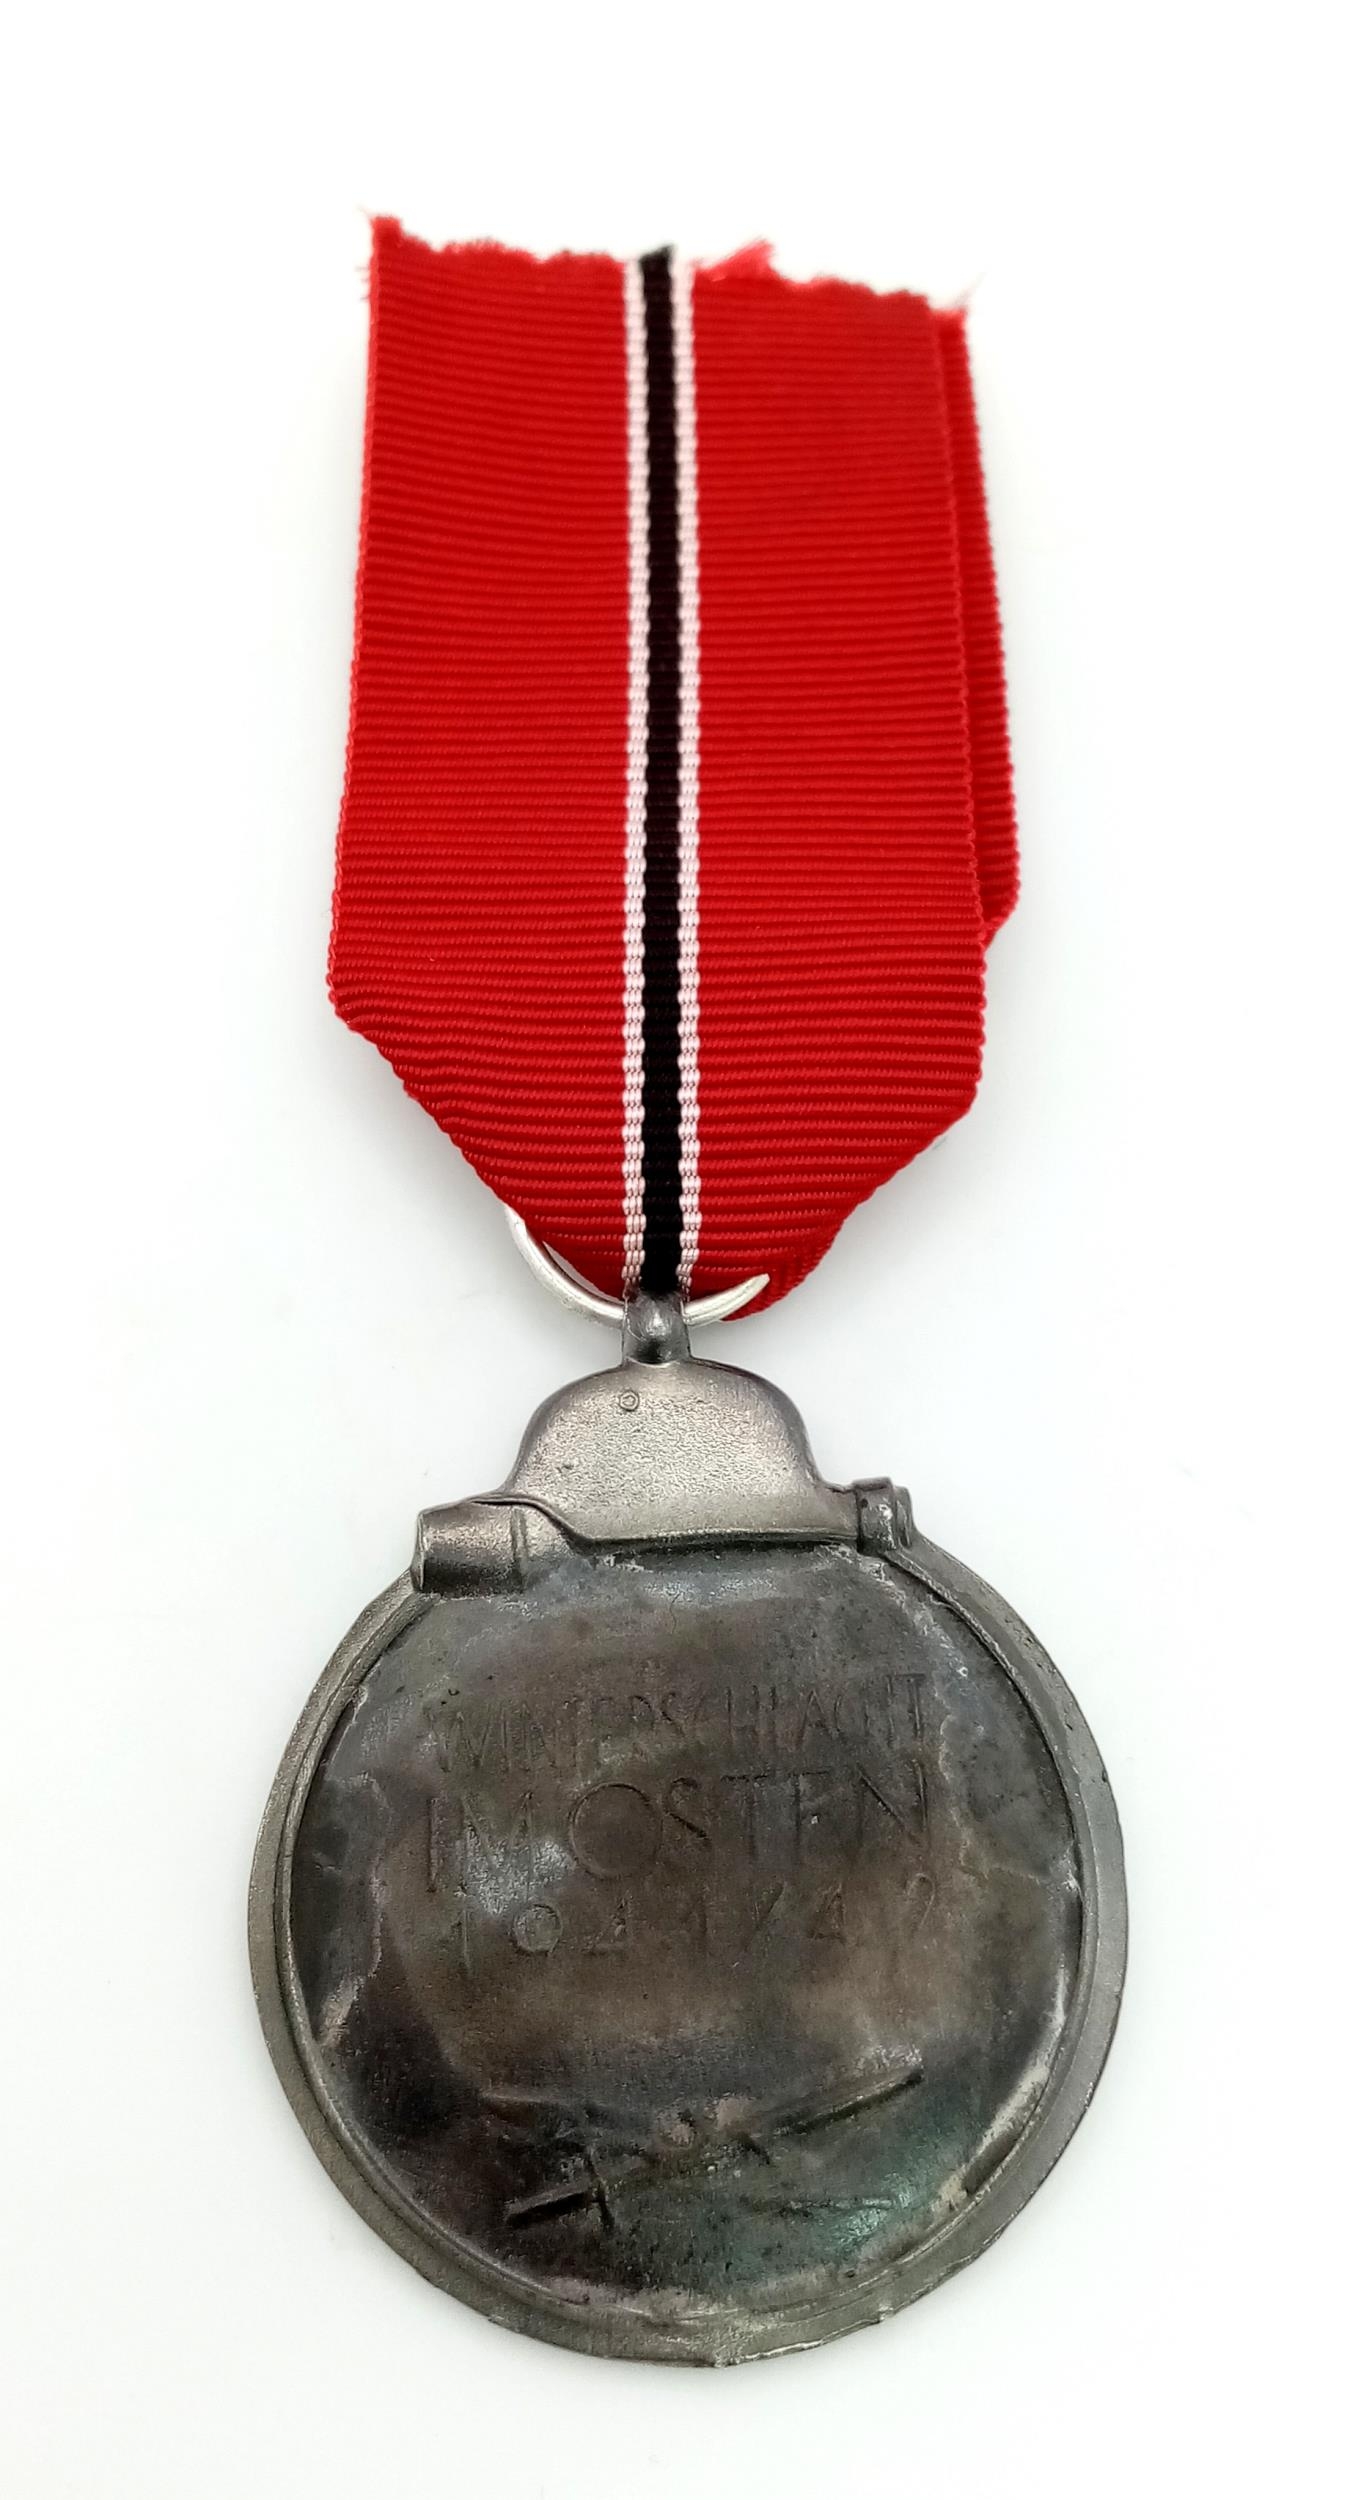 WW2 German Eastern Front Medal. - Image 2 of 3